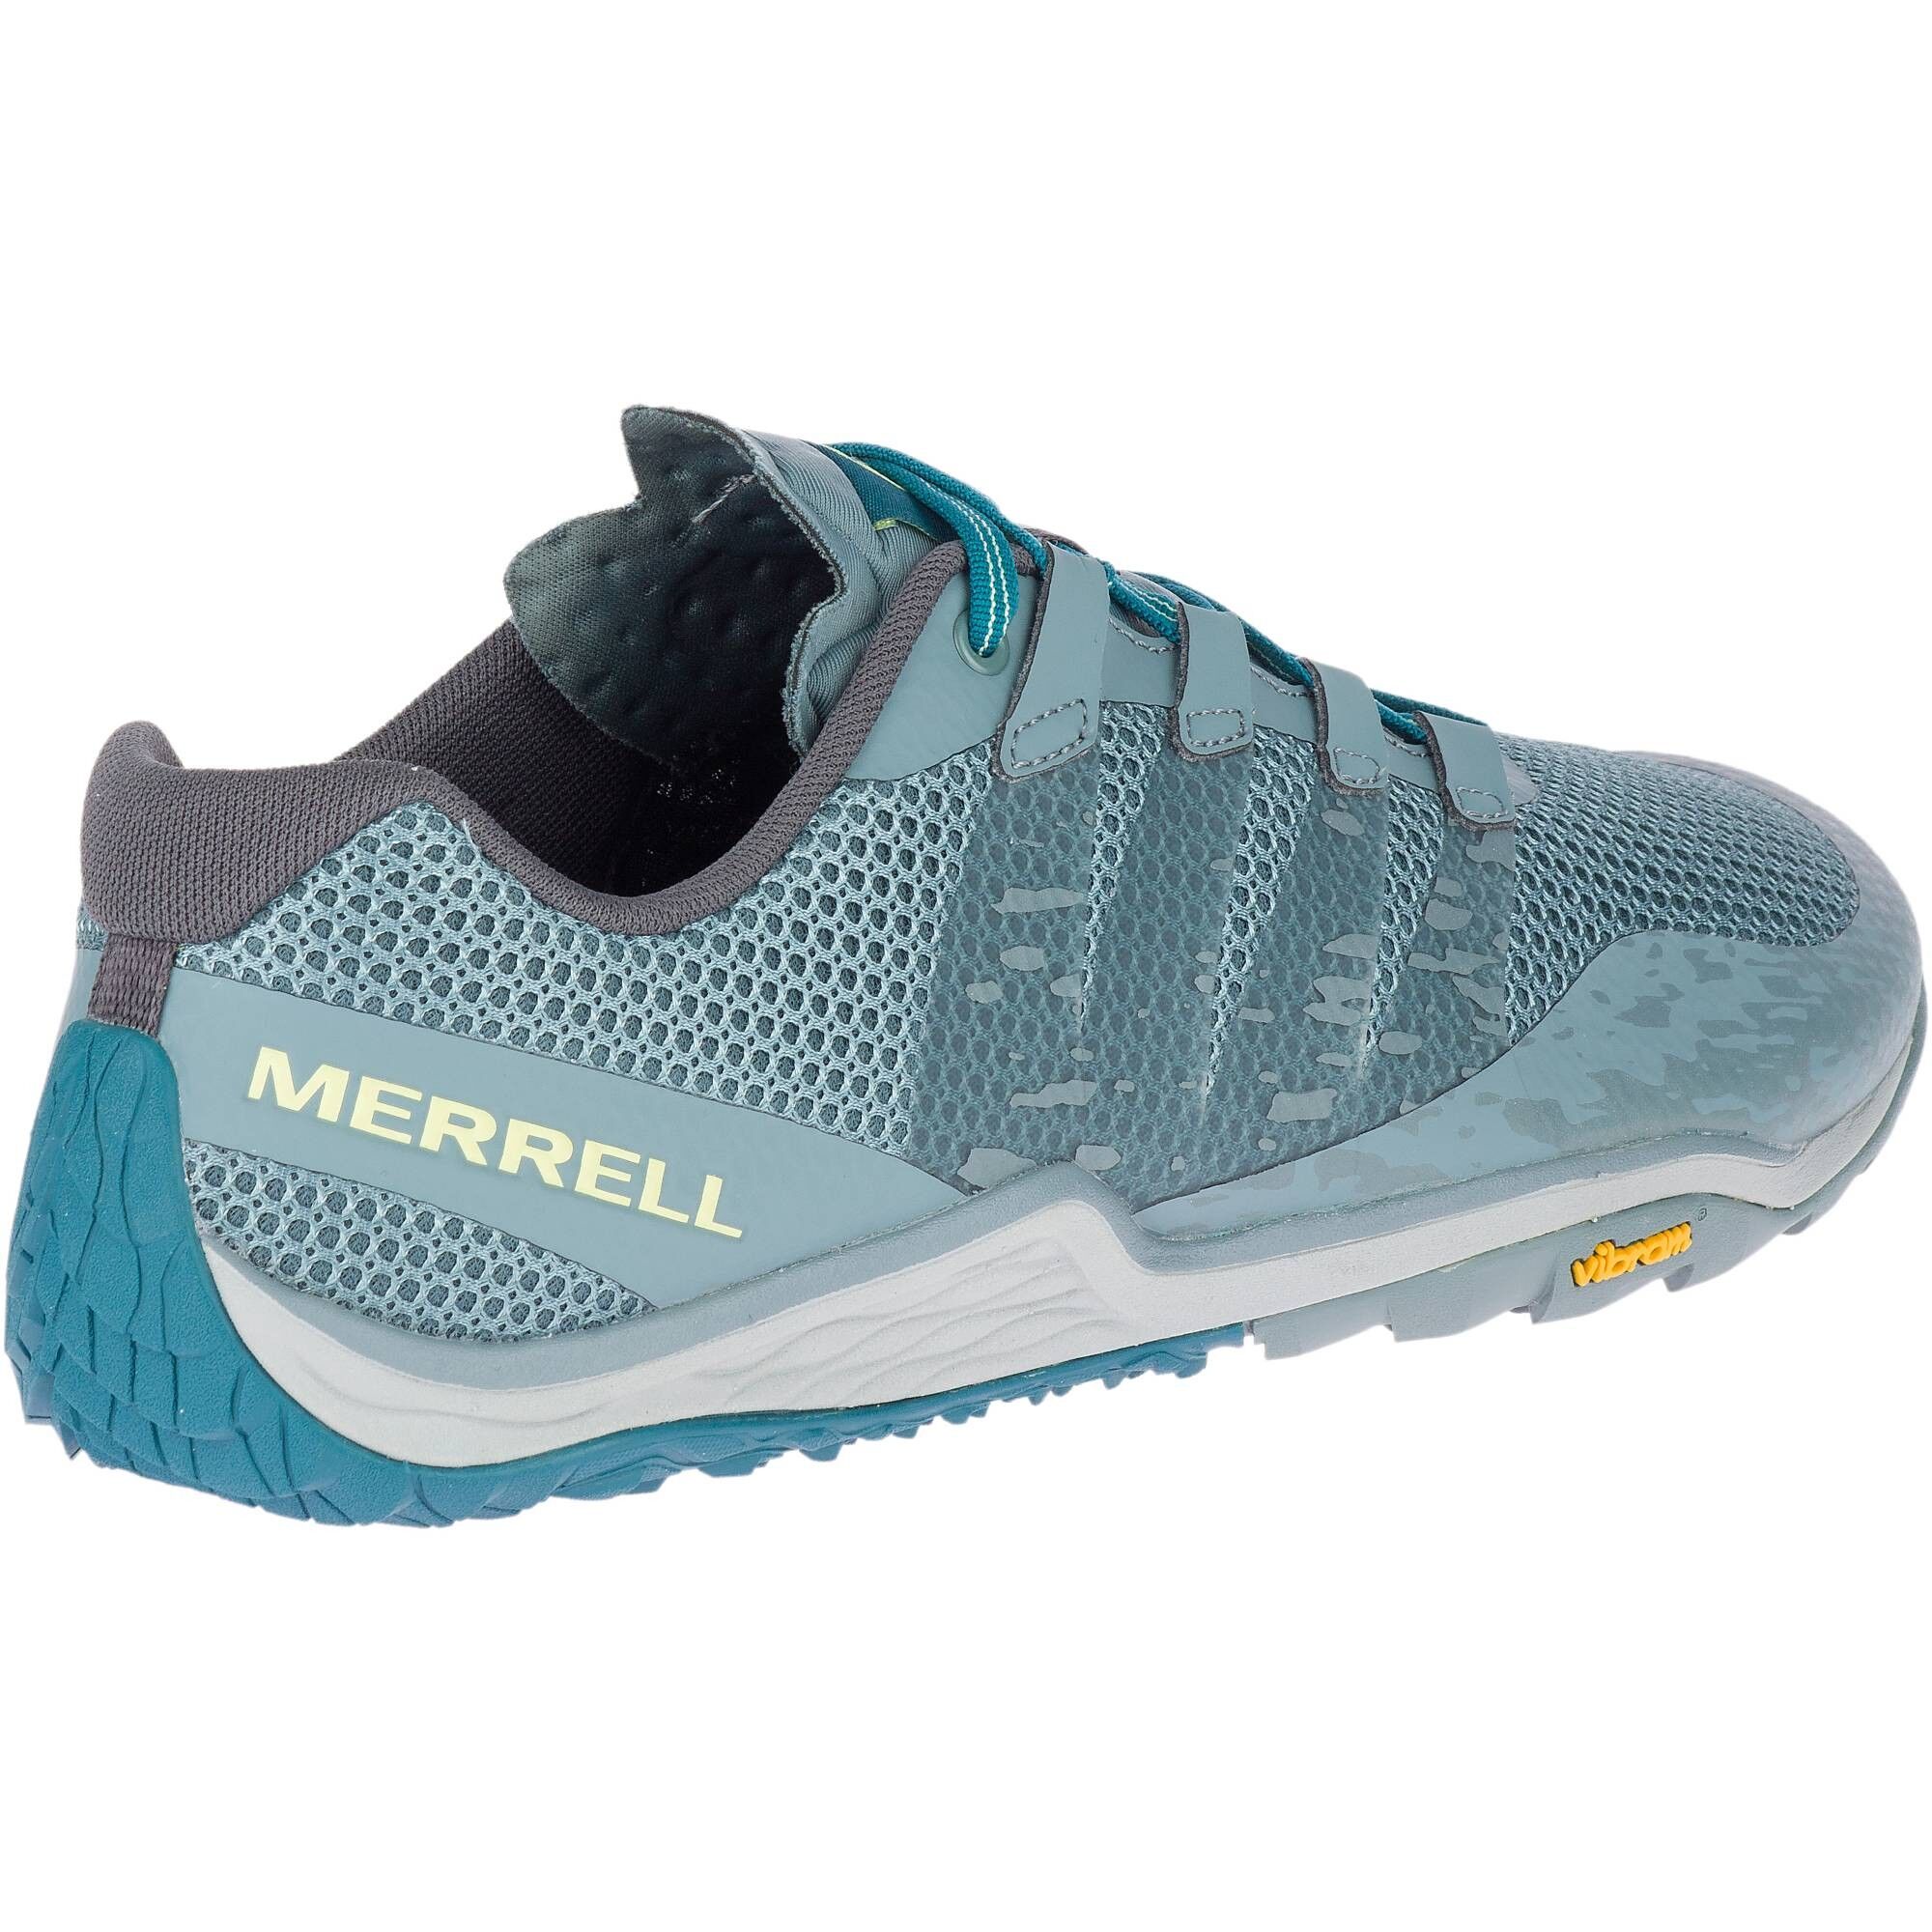 Merrell - Trail Glove 5 - Scarpe da trail running - Uomo